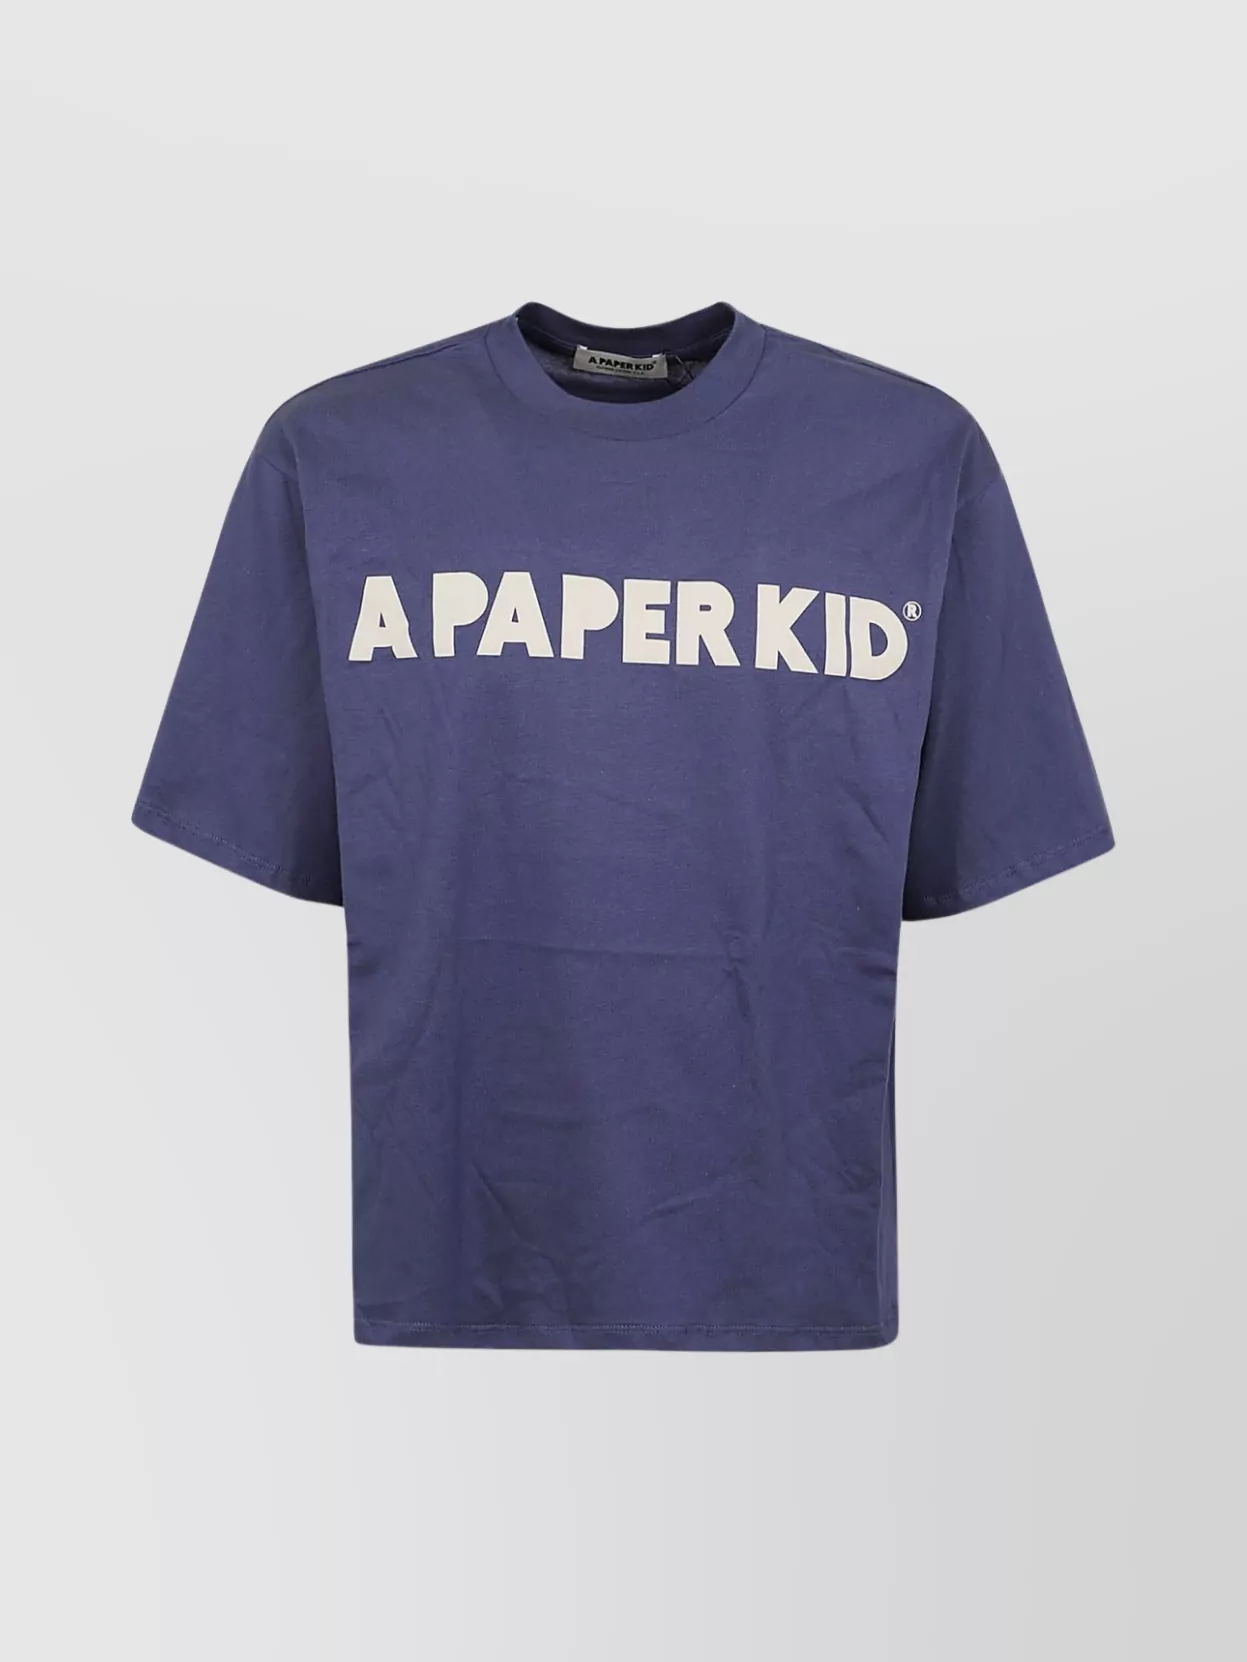 Shop A Paper Kid Crew Neck Unisex T-shirt Straight Hem